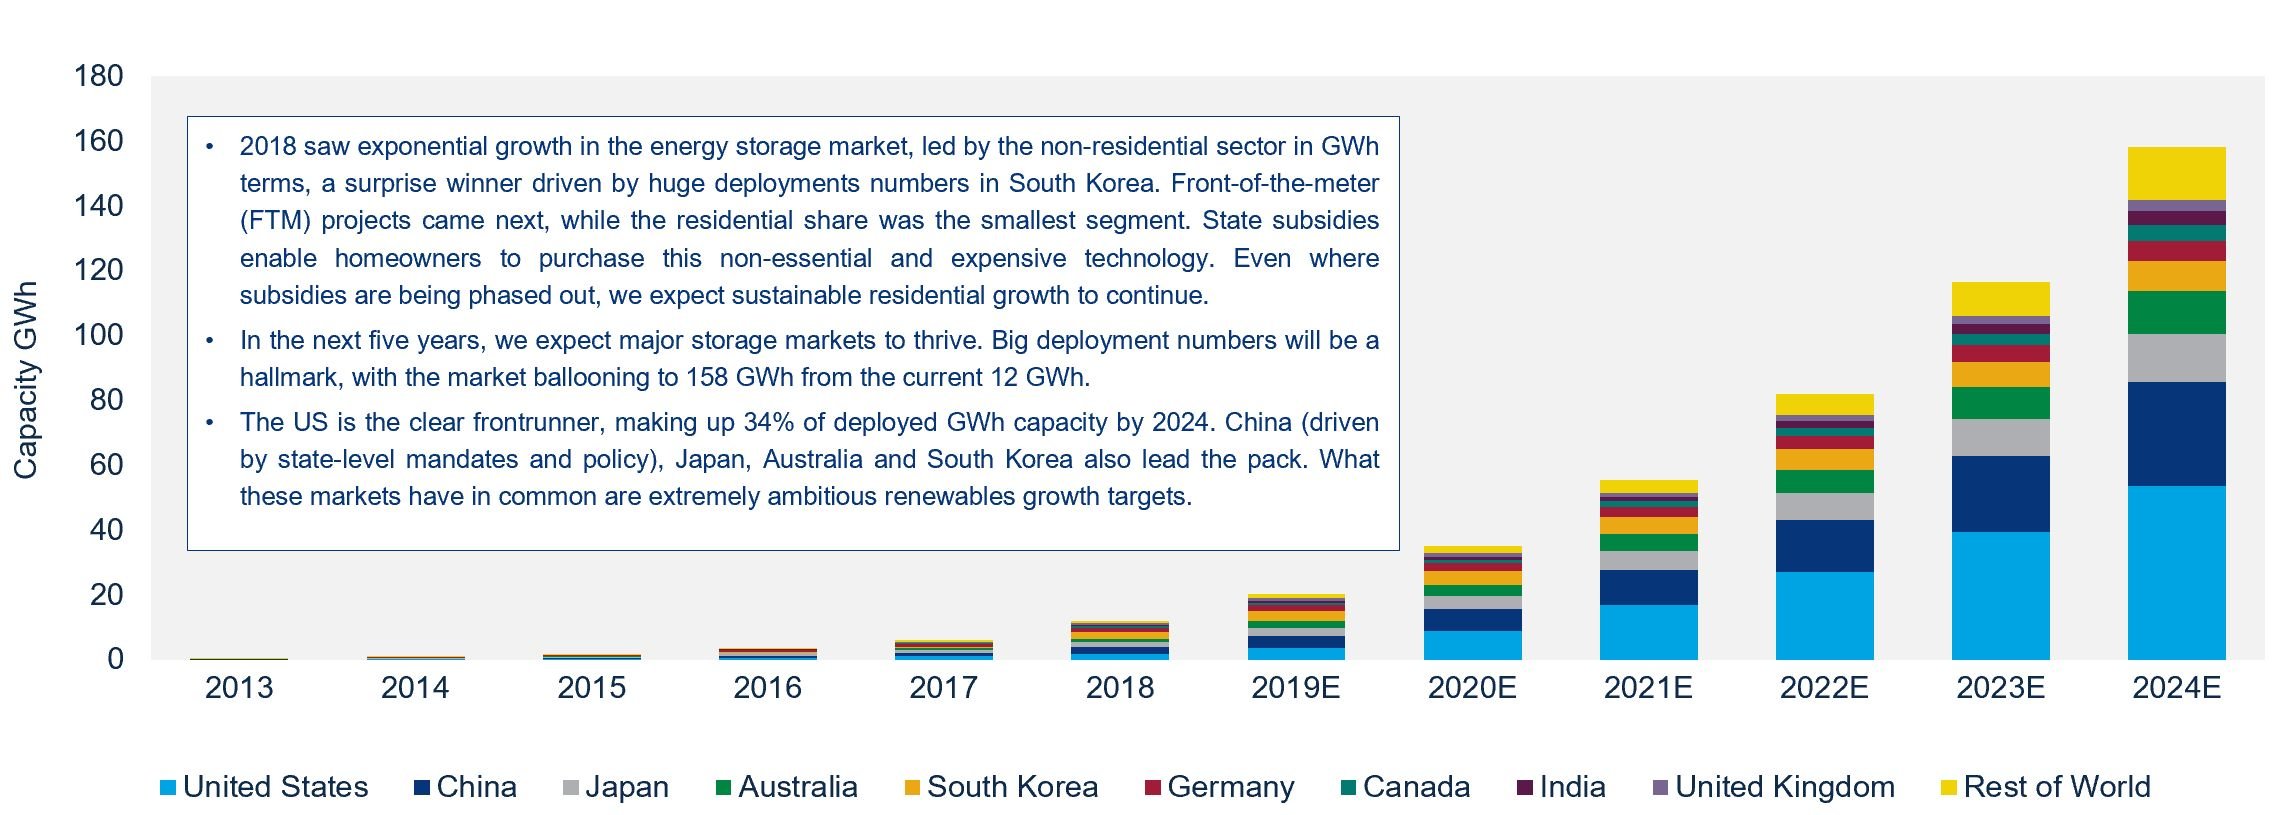 Wood Mackenzie's global energy storage outlook